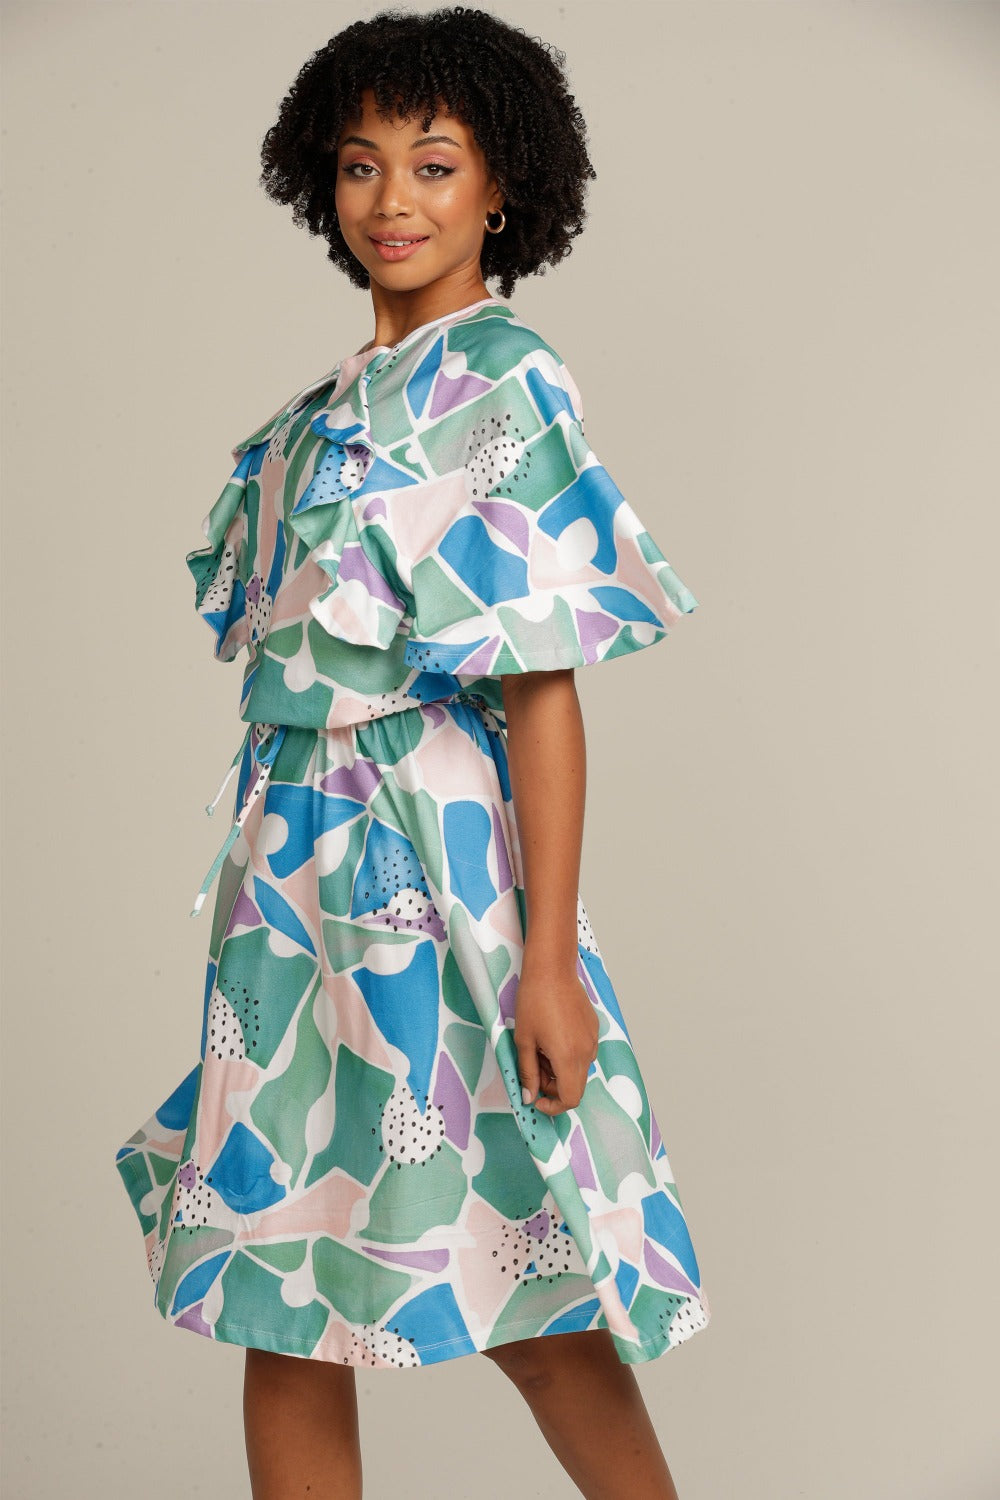 brown woman wearing an adaptive printed ruffle dress